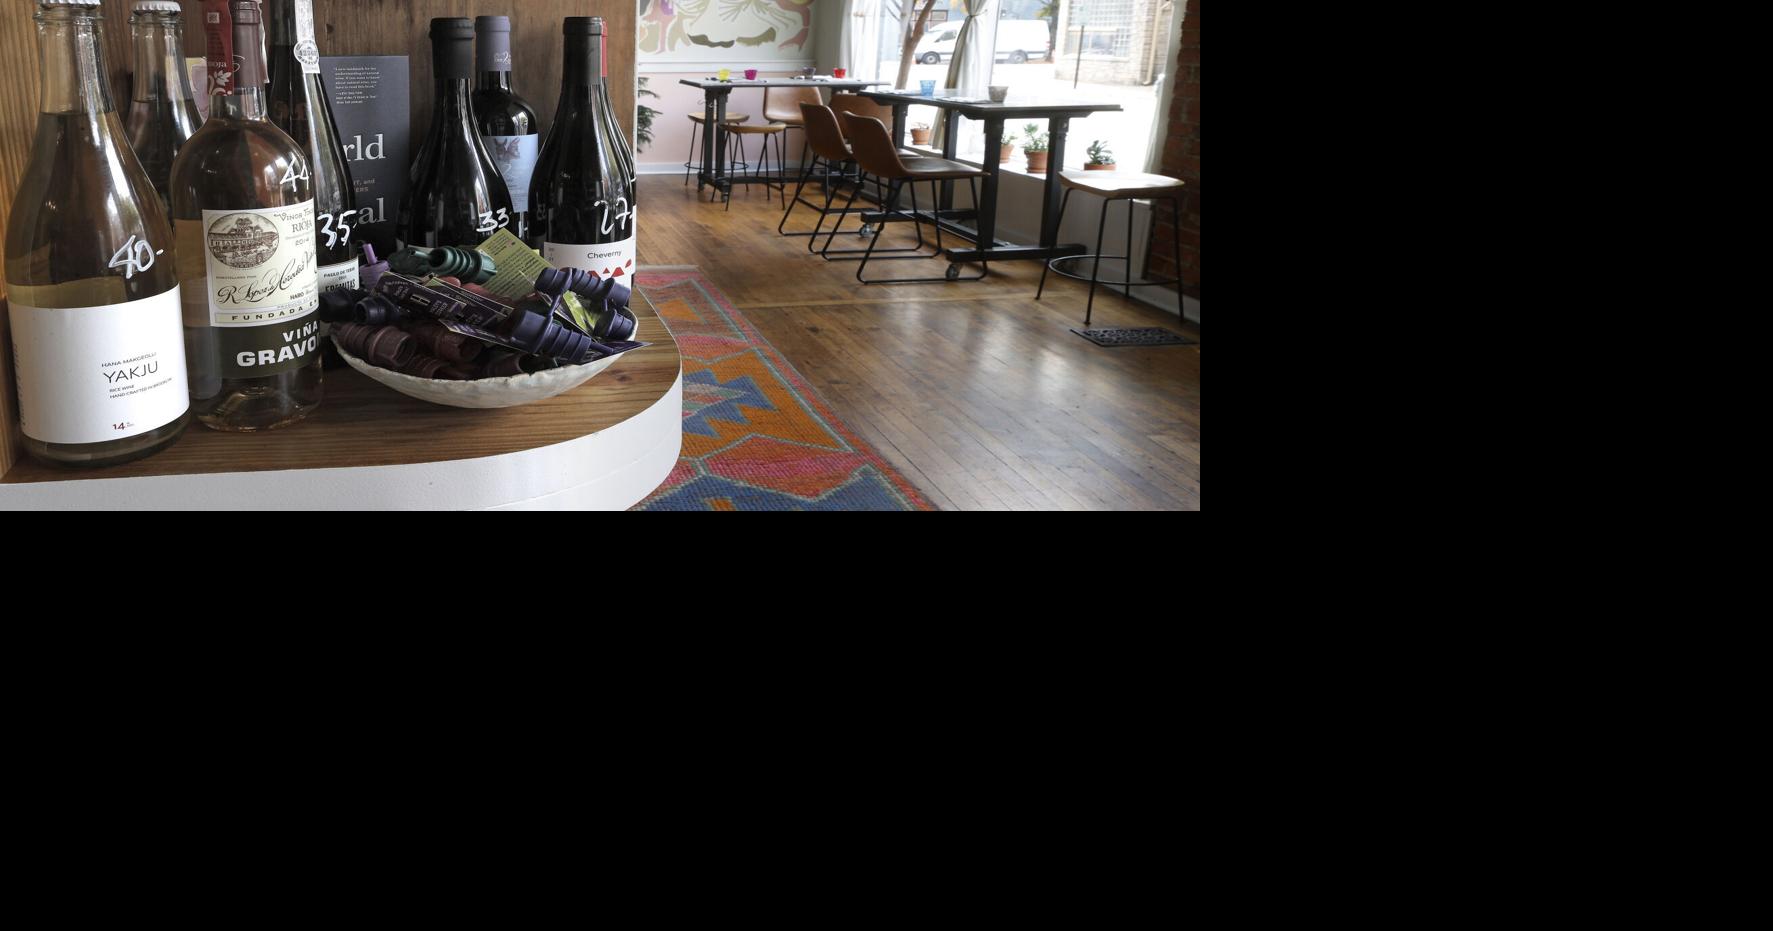 Beyond Meat Burger is here  Living Vino: Plant-Based Restaurant & Natural  Wine Bar